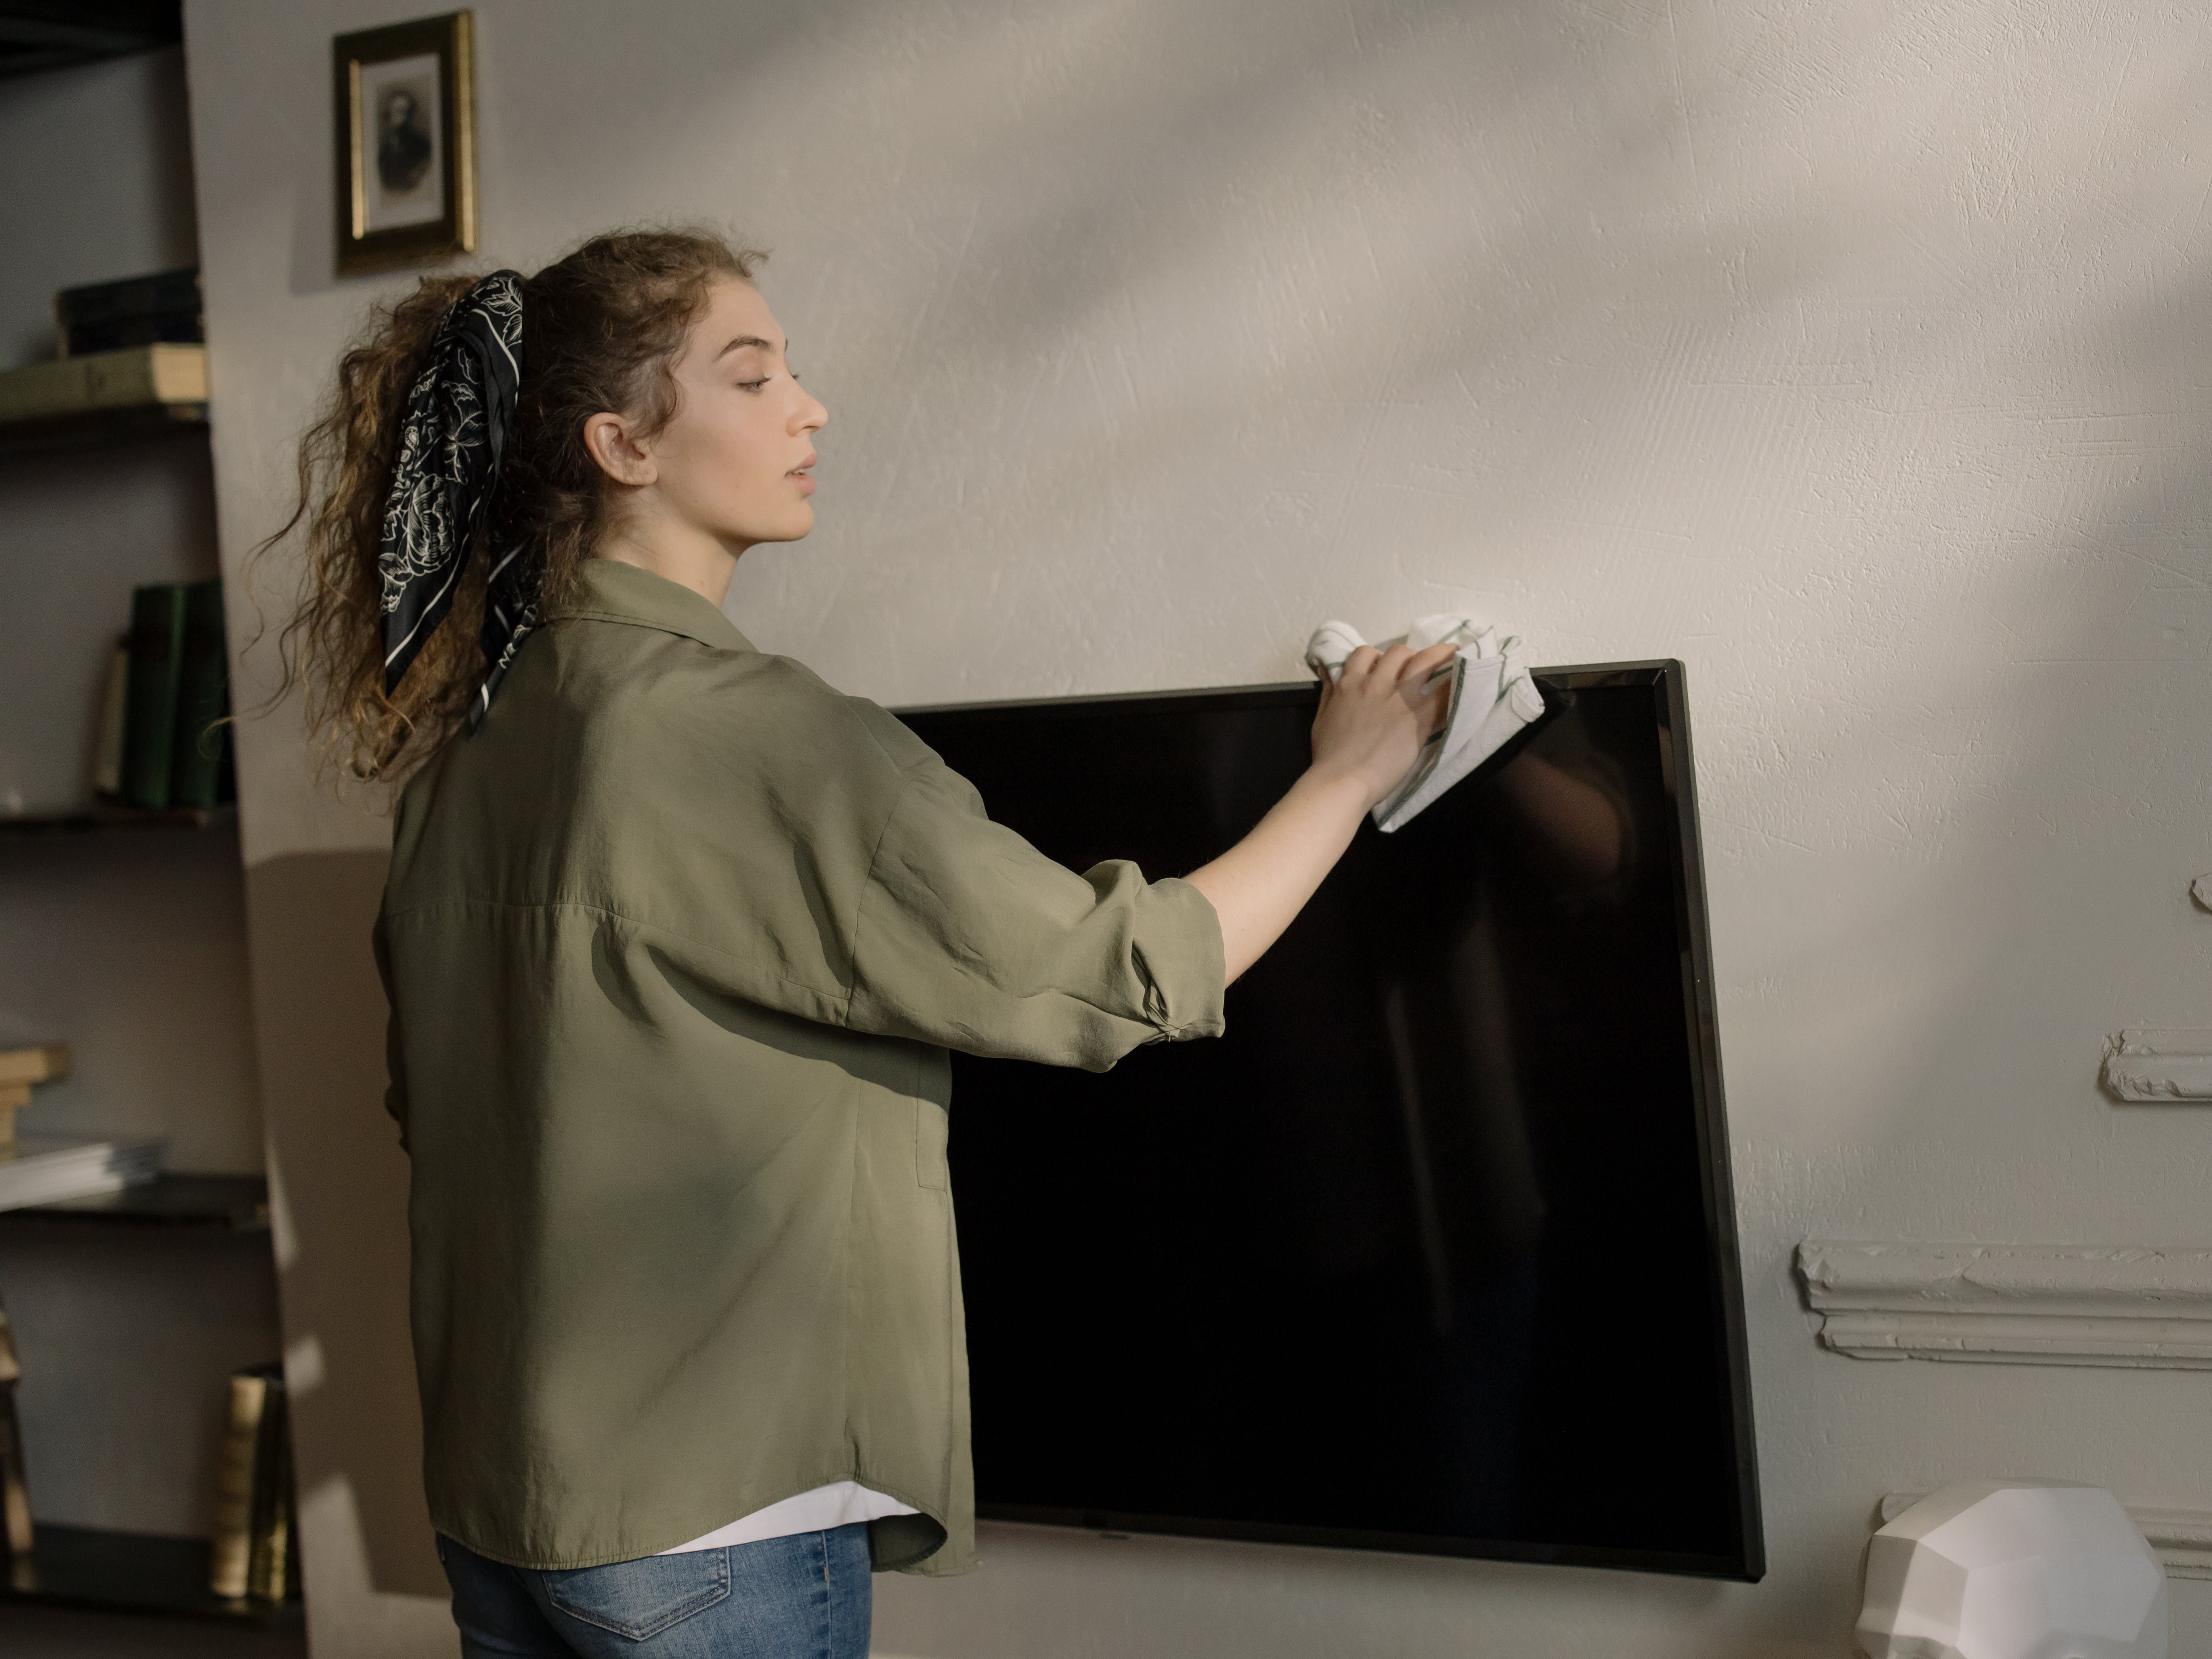 A woman standing holding a flat screen TV. | Source: Pexels